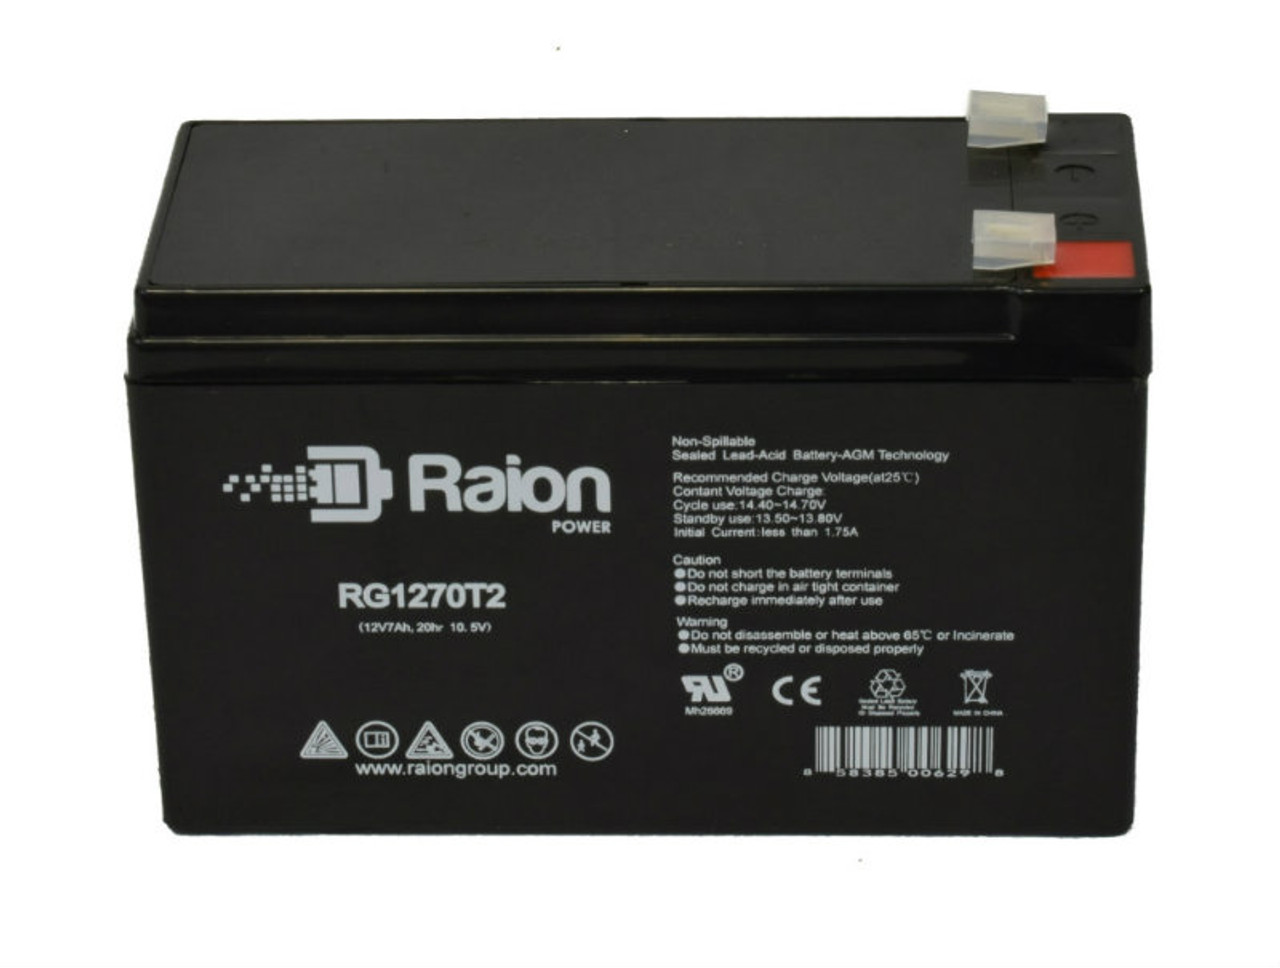 Raion Power RG1270T2 12V 7Ah Lead Acid Battery for Exell EB1270F2